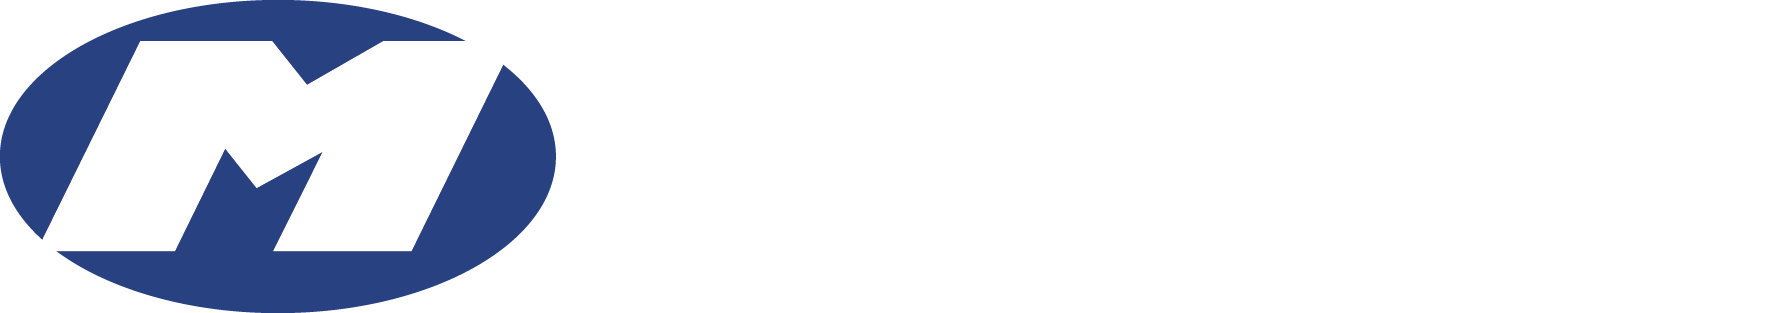 Midland Automotive logo